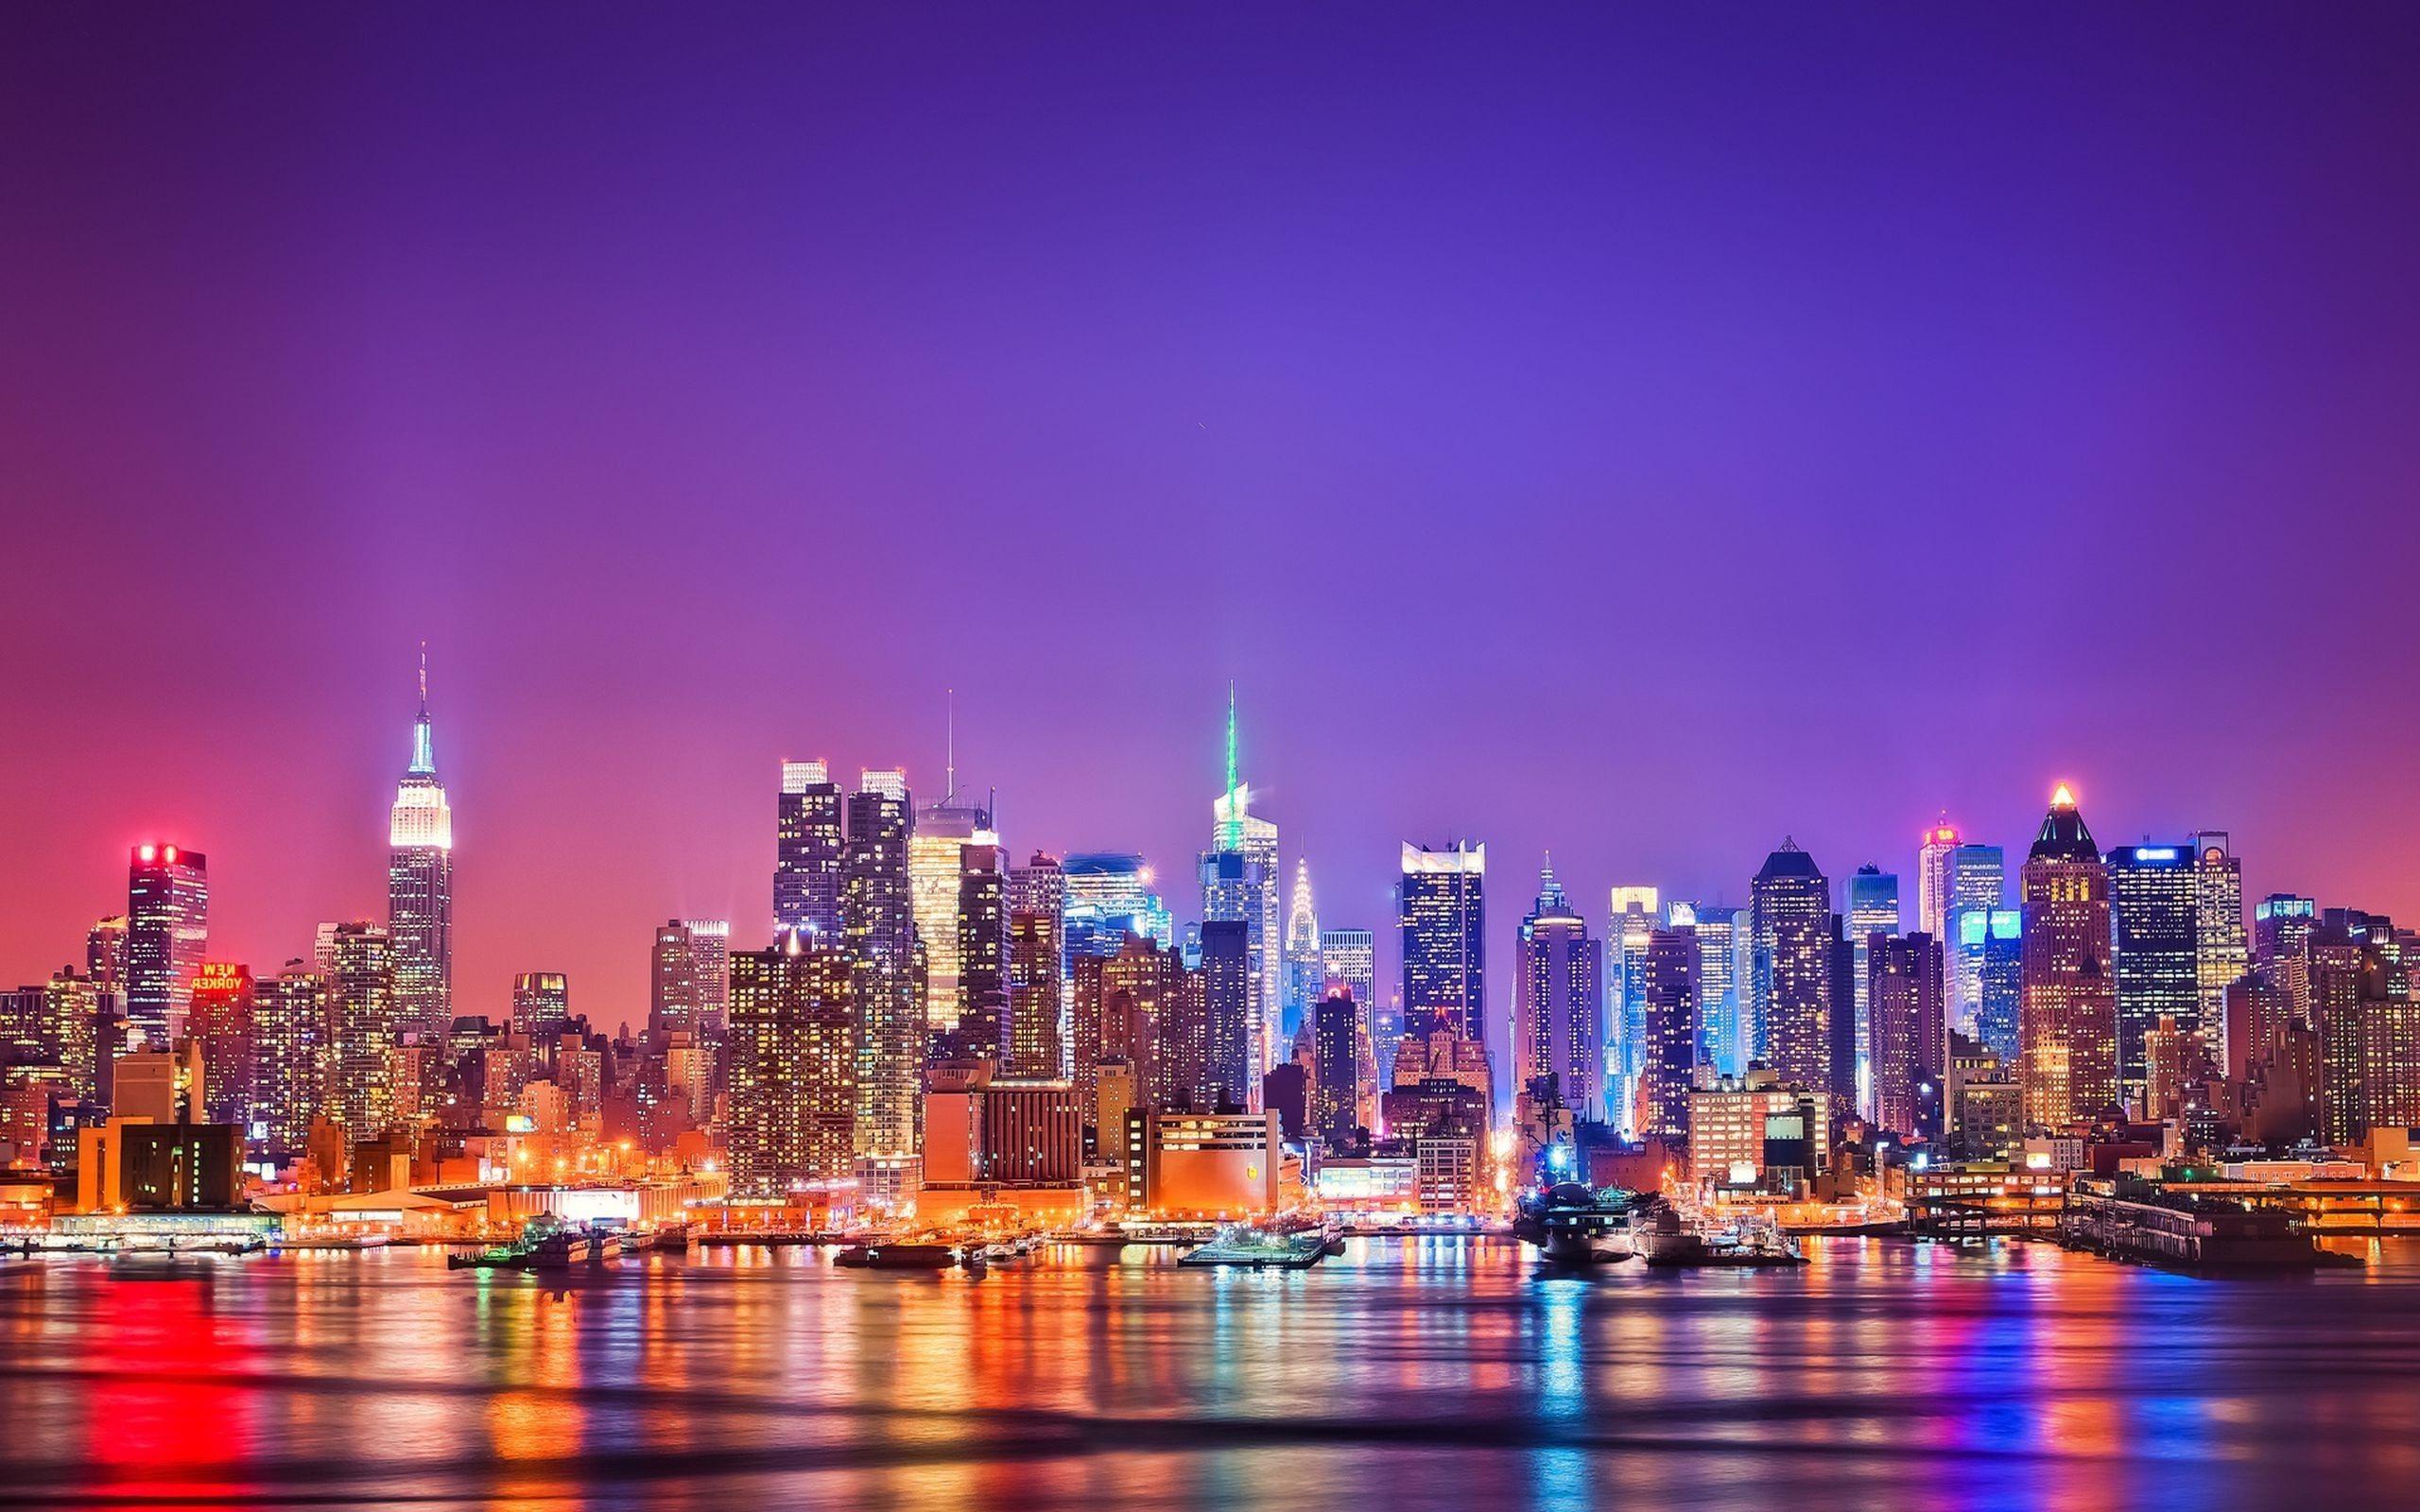 Beautiful New York City Light at Night Wallpaper in High Resolution